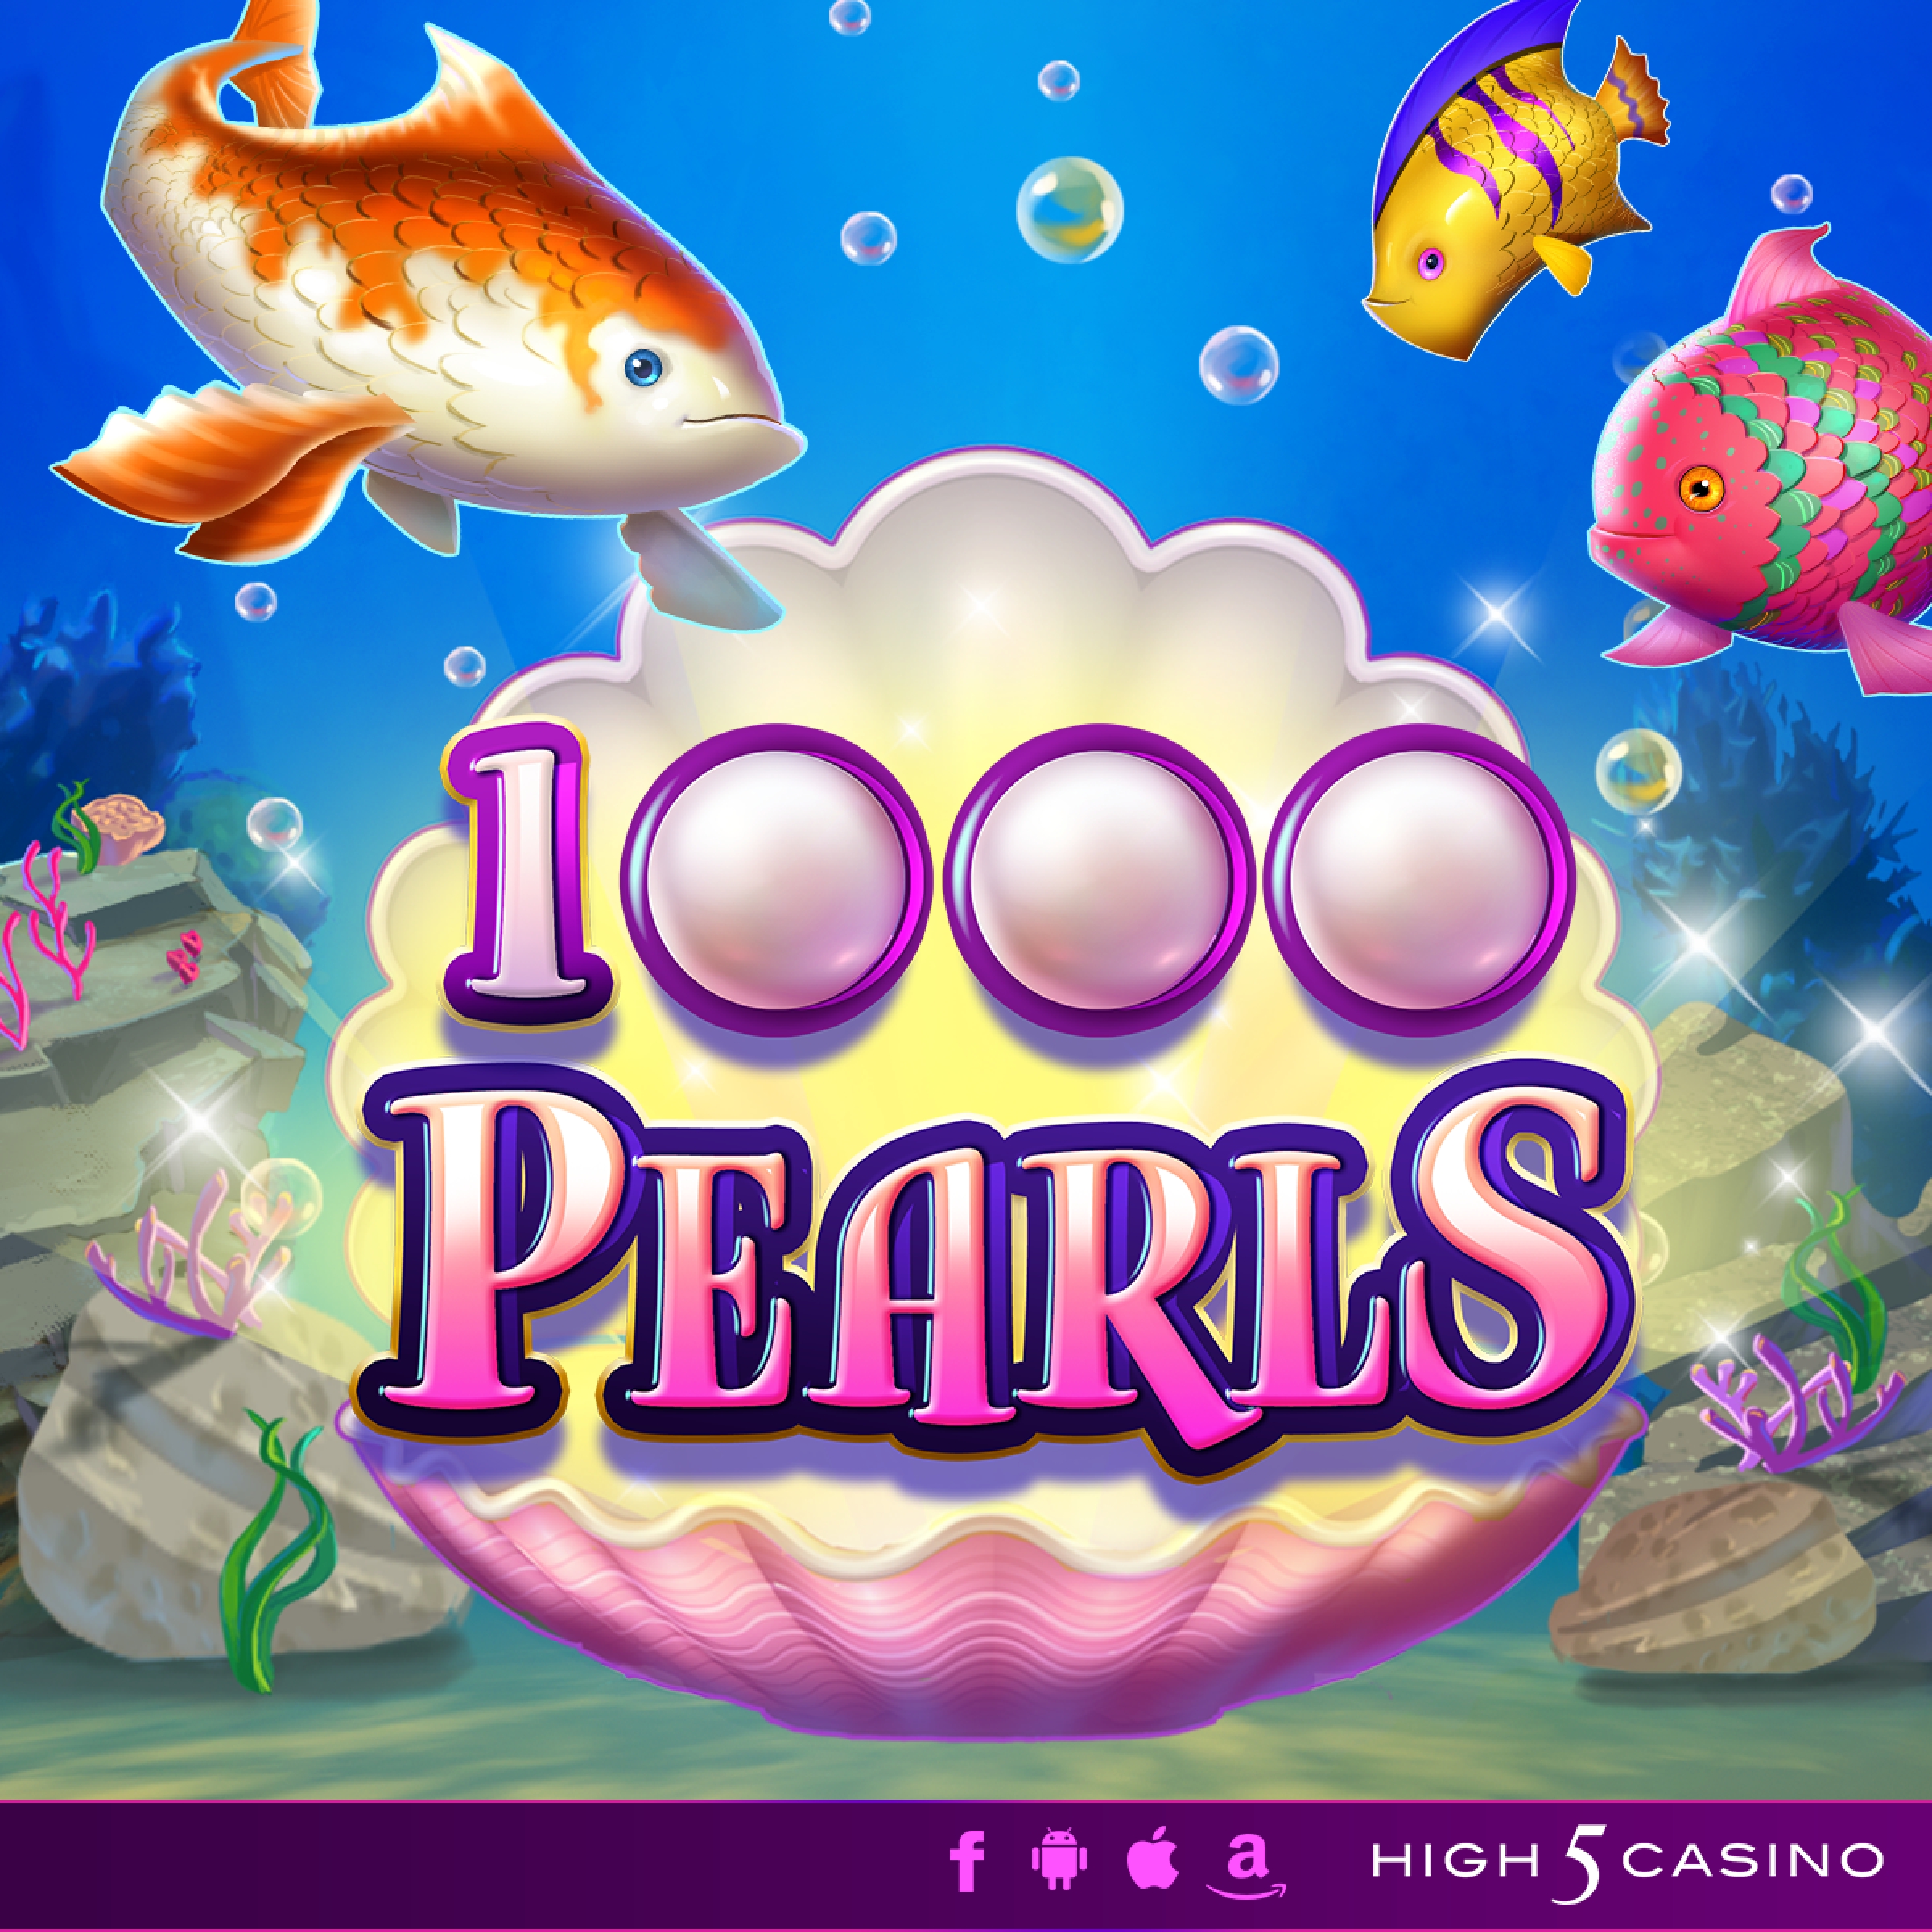 1000 Pearls demo